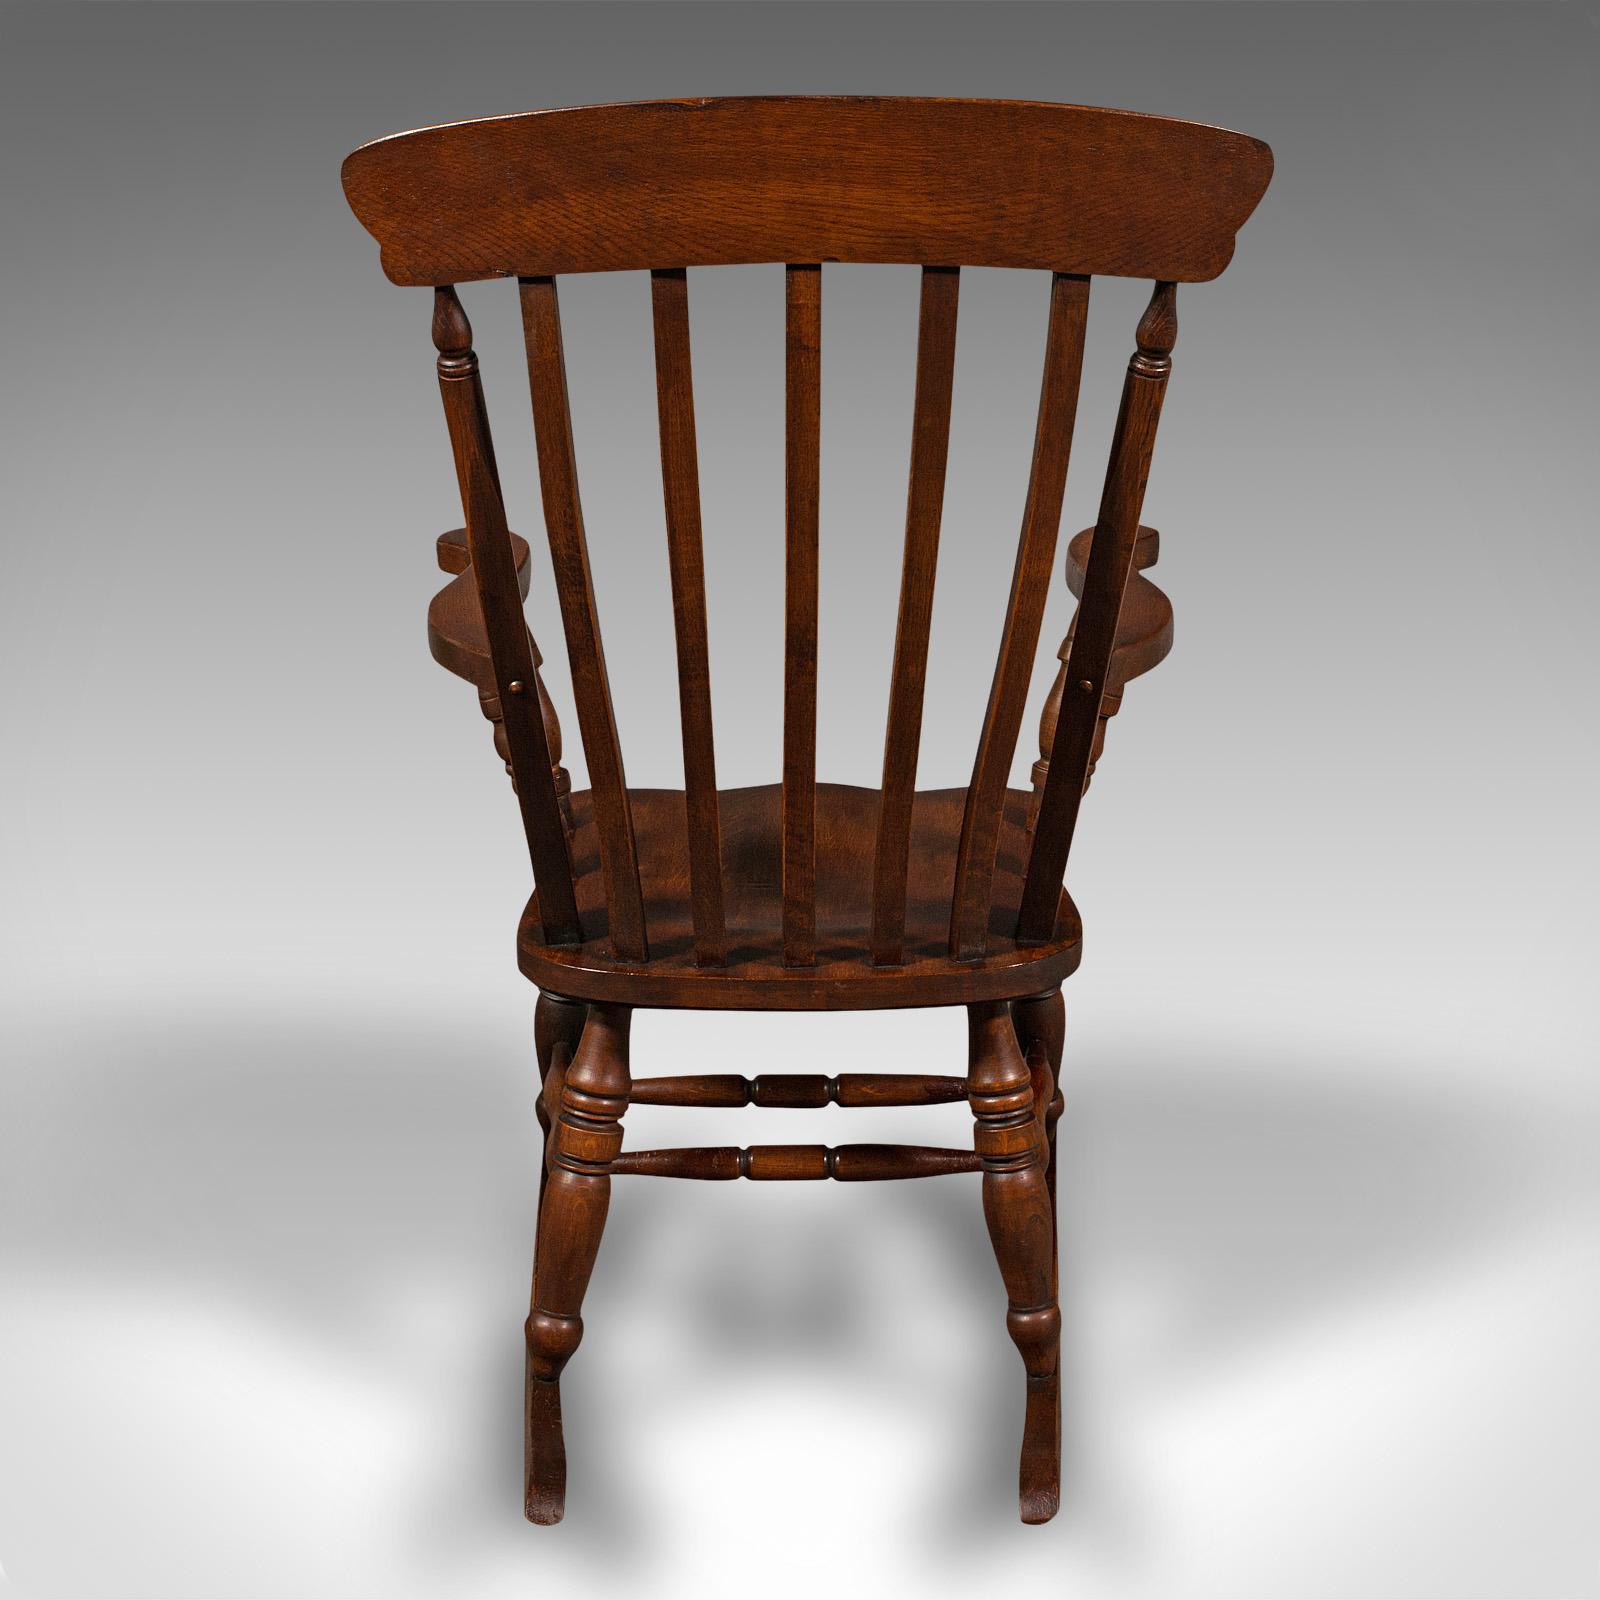 19th Century Antique Lath Back Rocking Chair, English Oak, Beech, Elbow Seat, Victorian, 1900